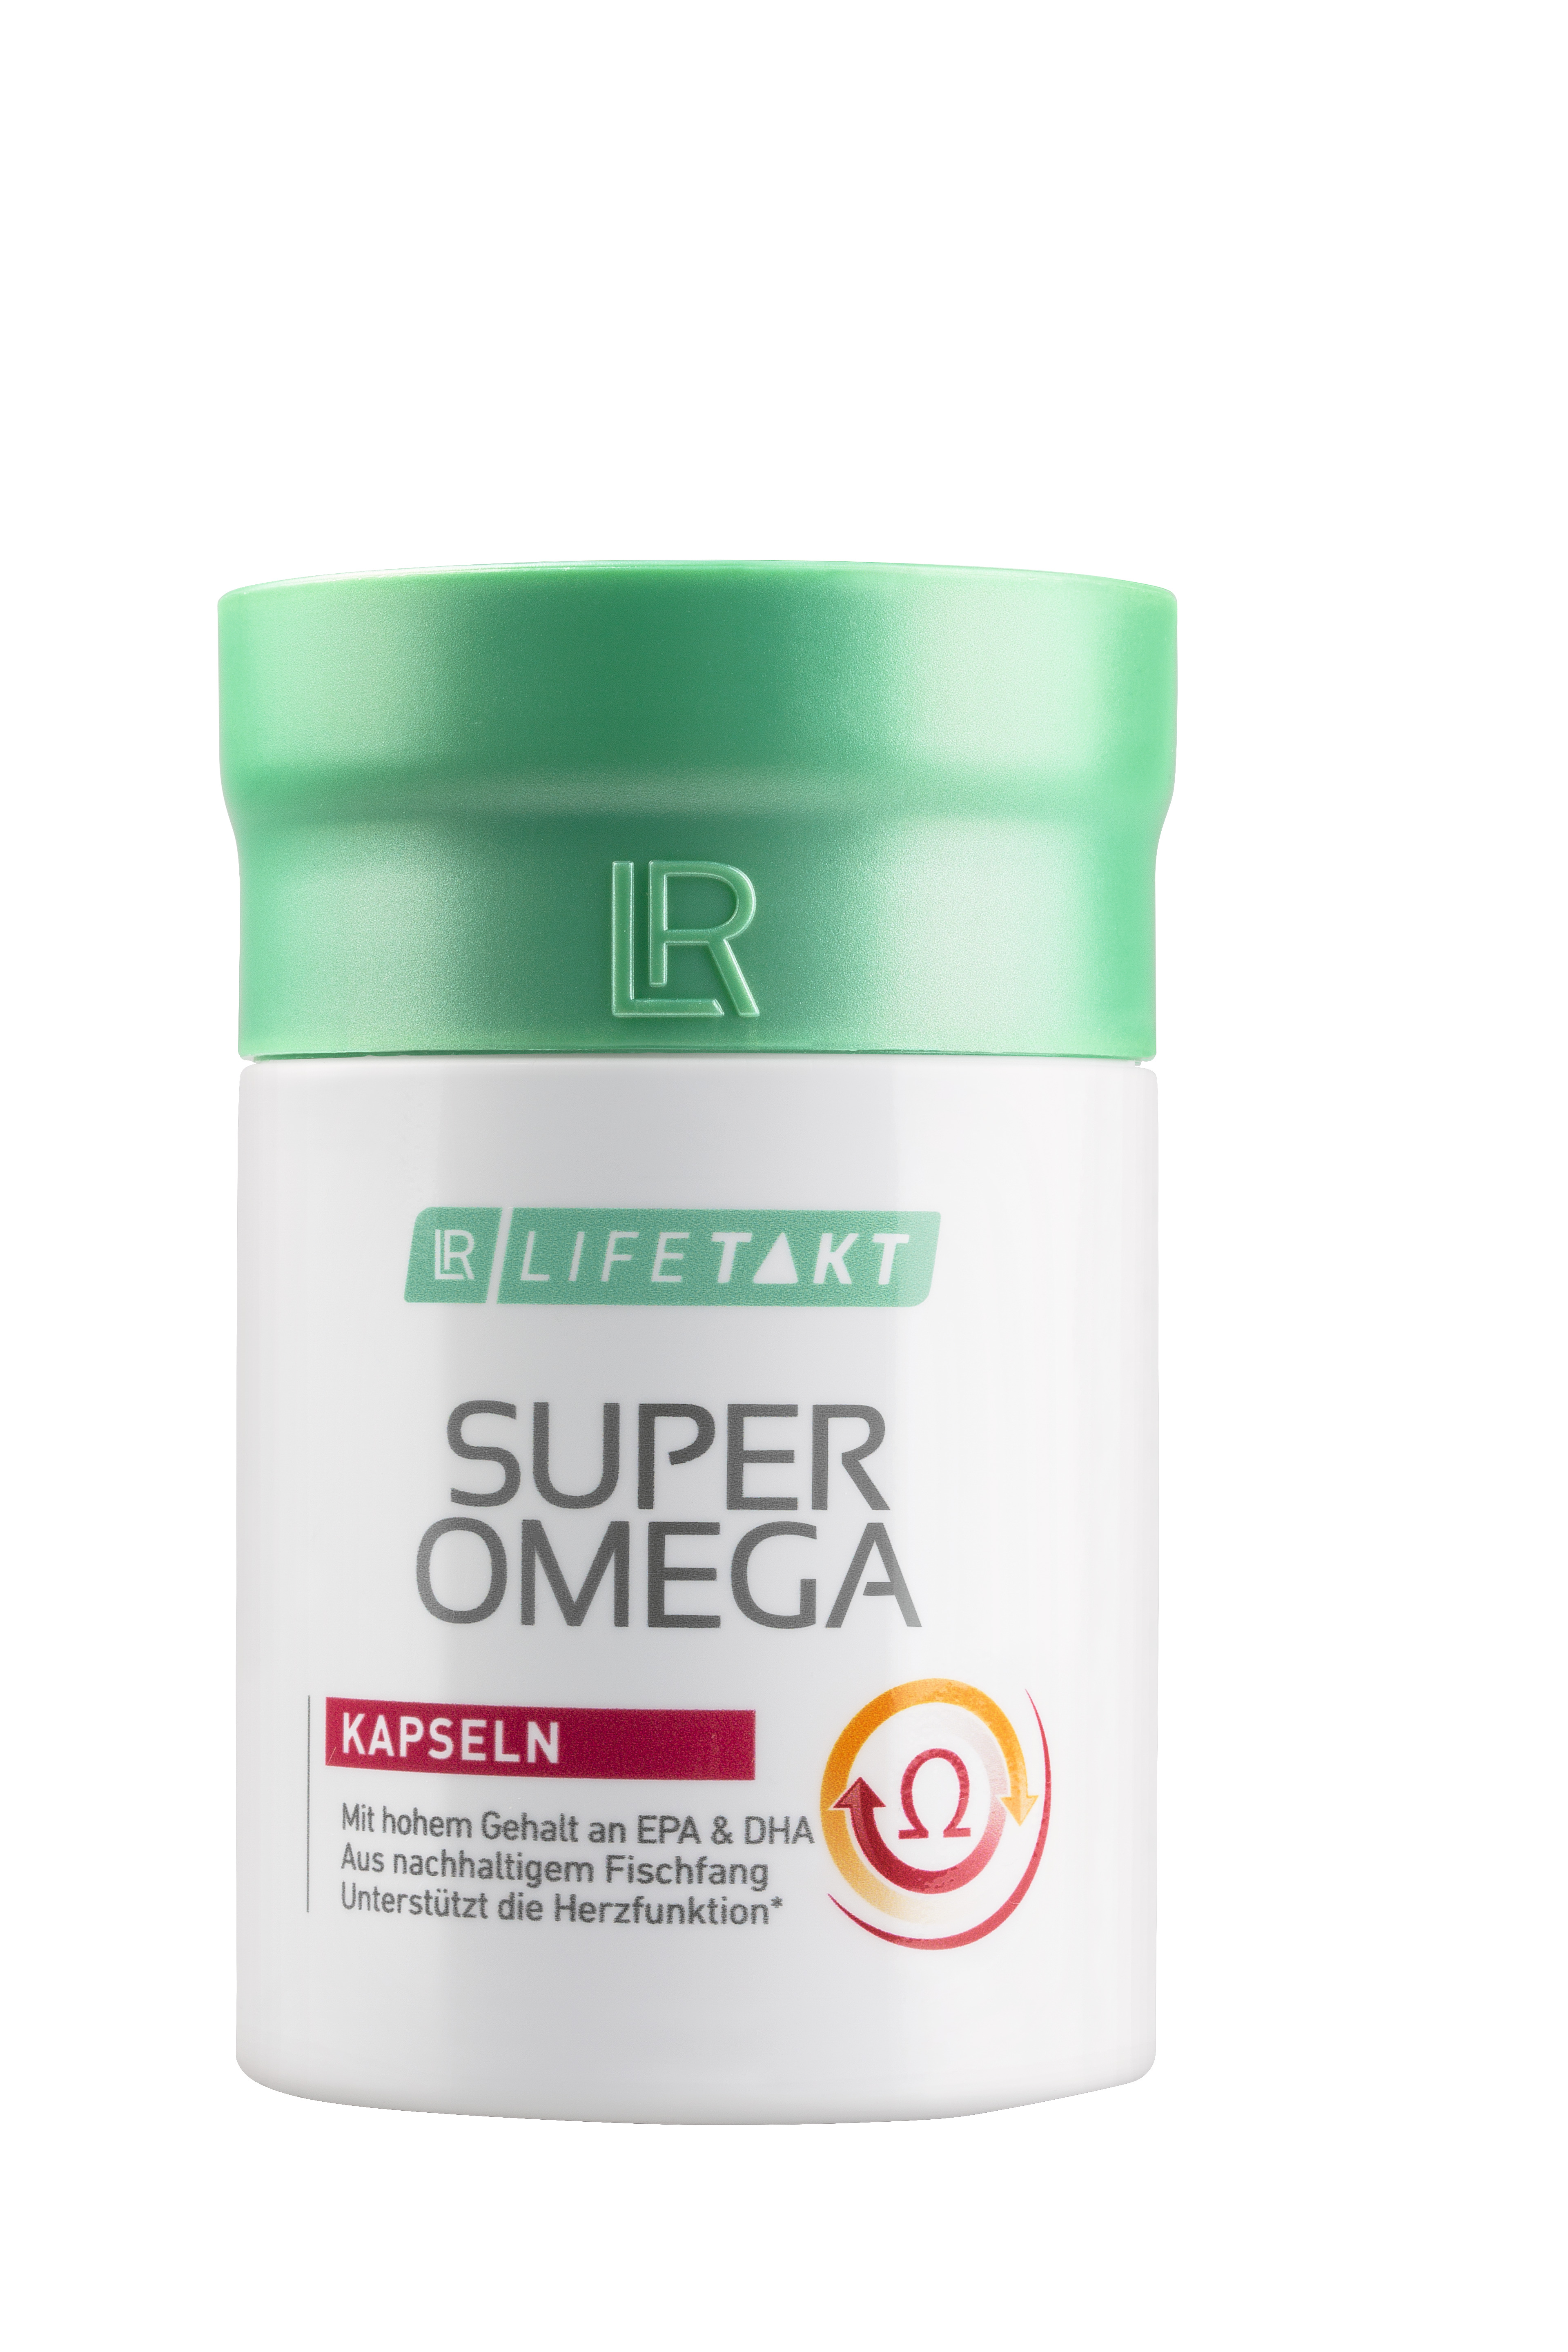 Super Omega capsules